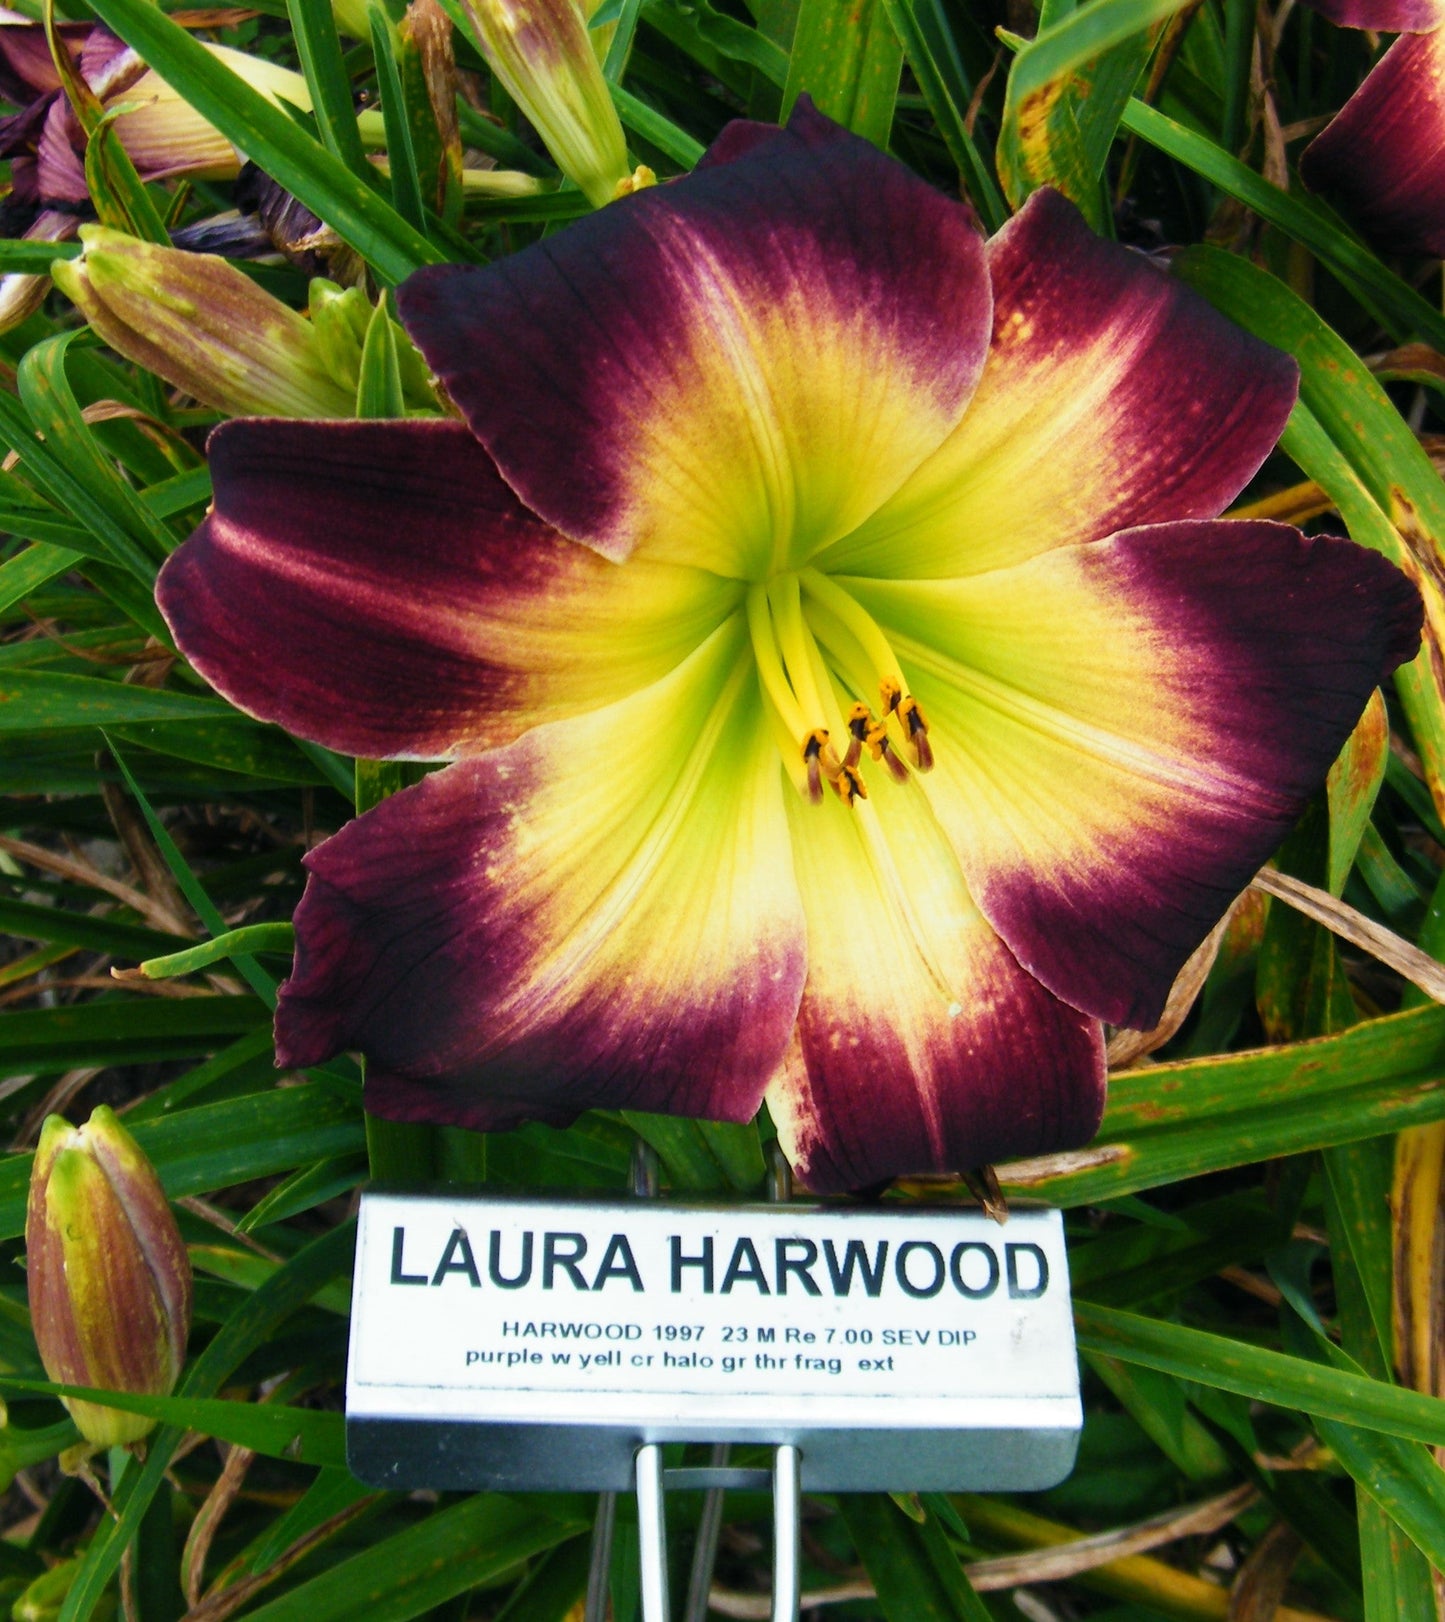 LAURA HARWOOD